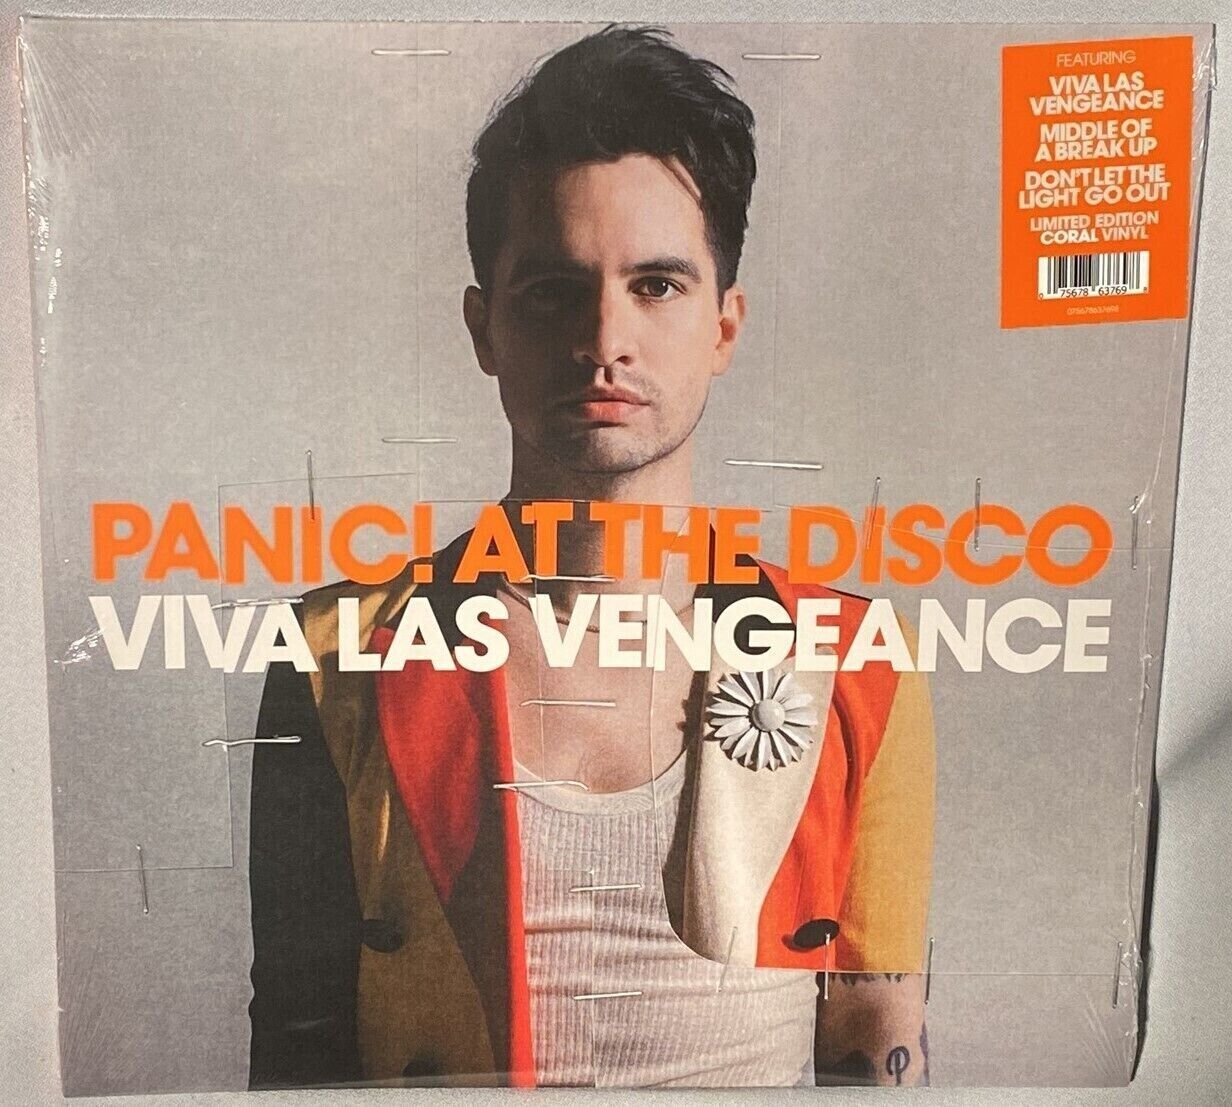 Panic! At the Disco - Viva Las Vengeance [Coral Vinyl] - NEW Sealed LP Album